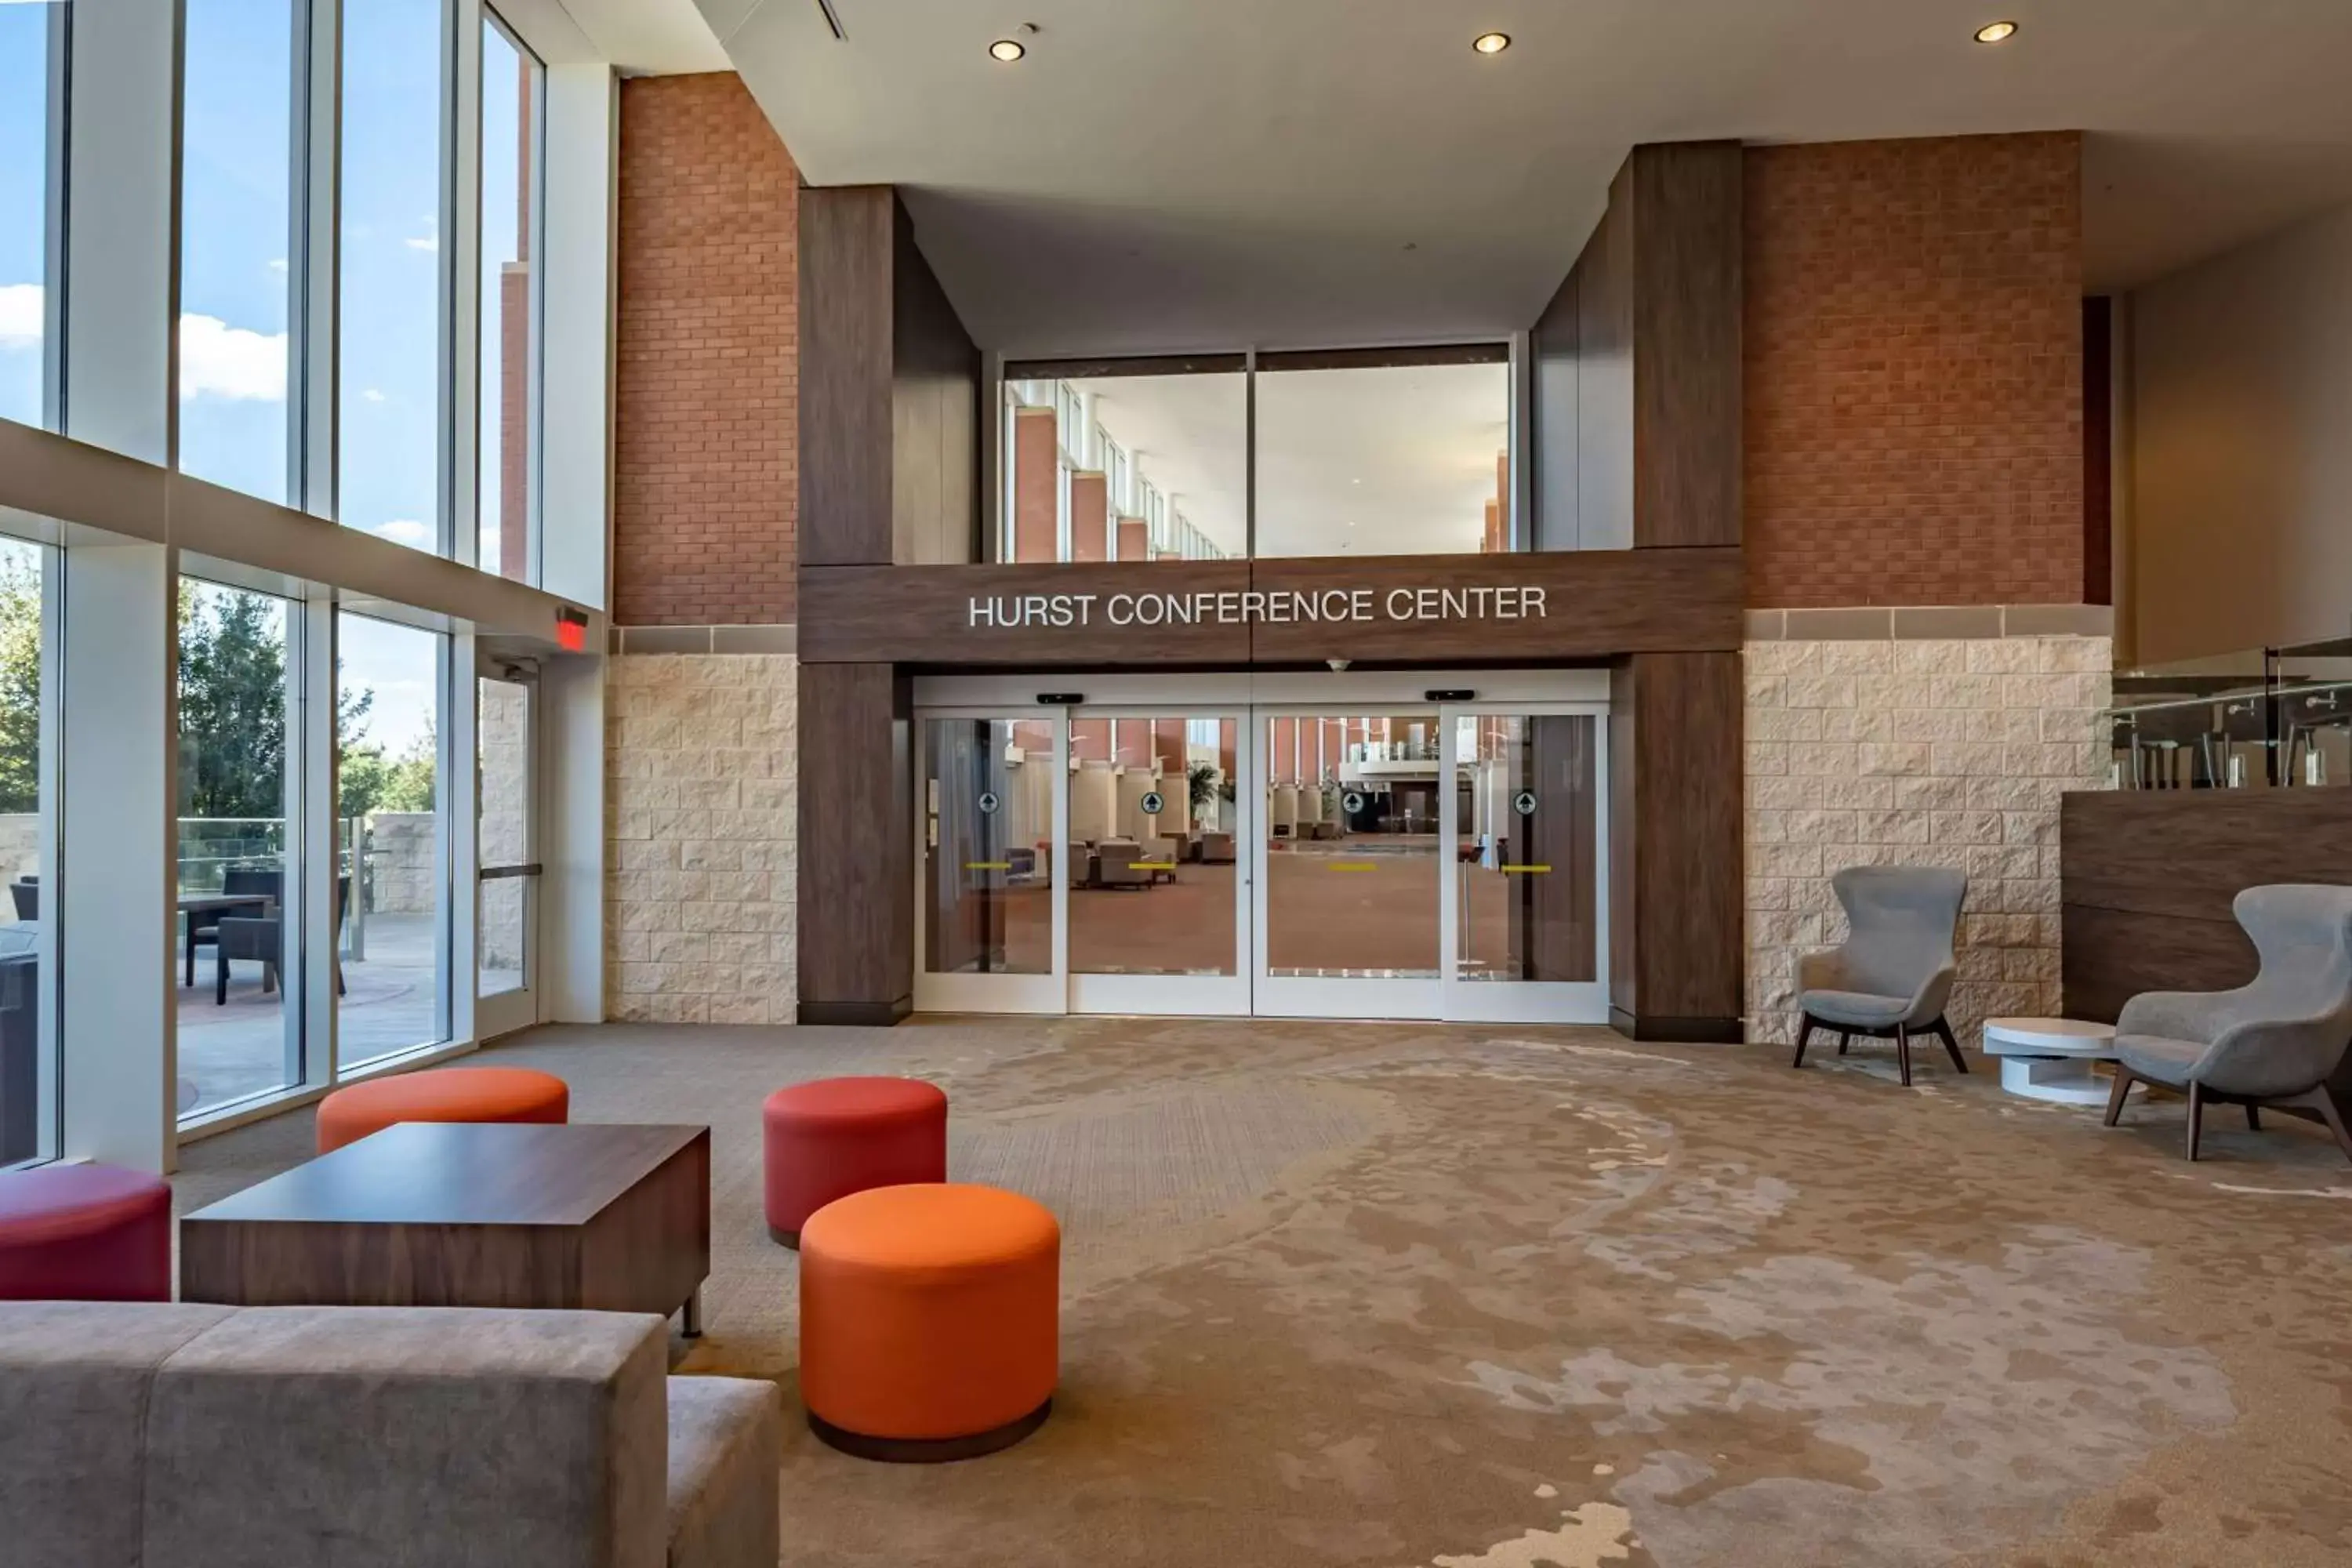 Lobby or reception in Hilton Garden Inn Dallas At Hurst Conference Center